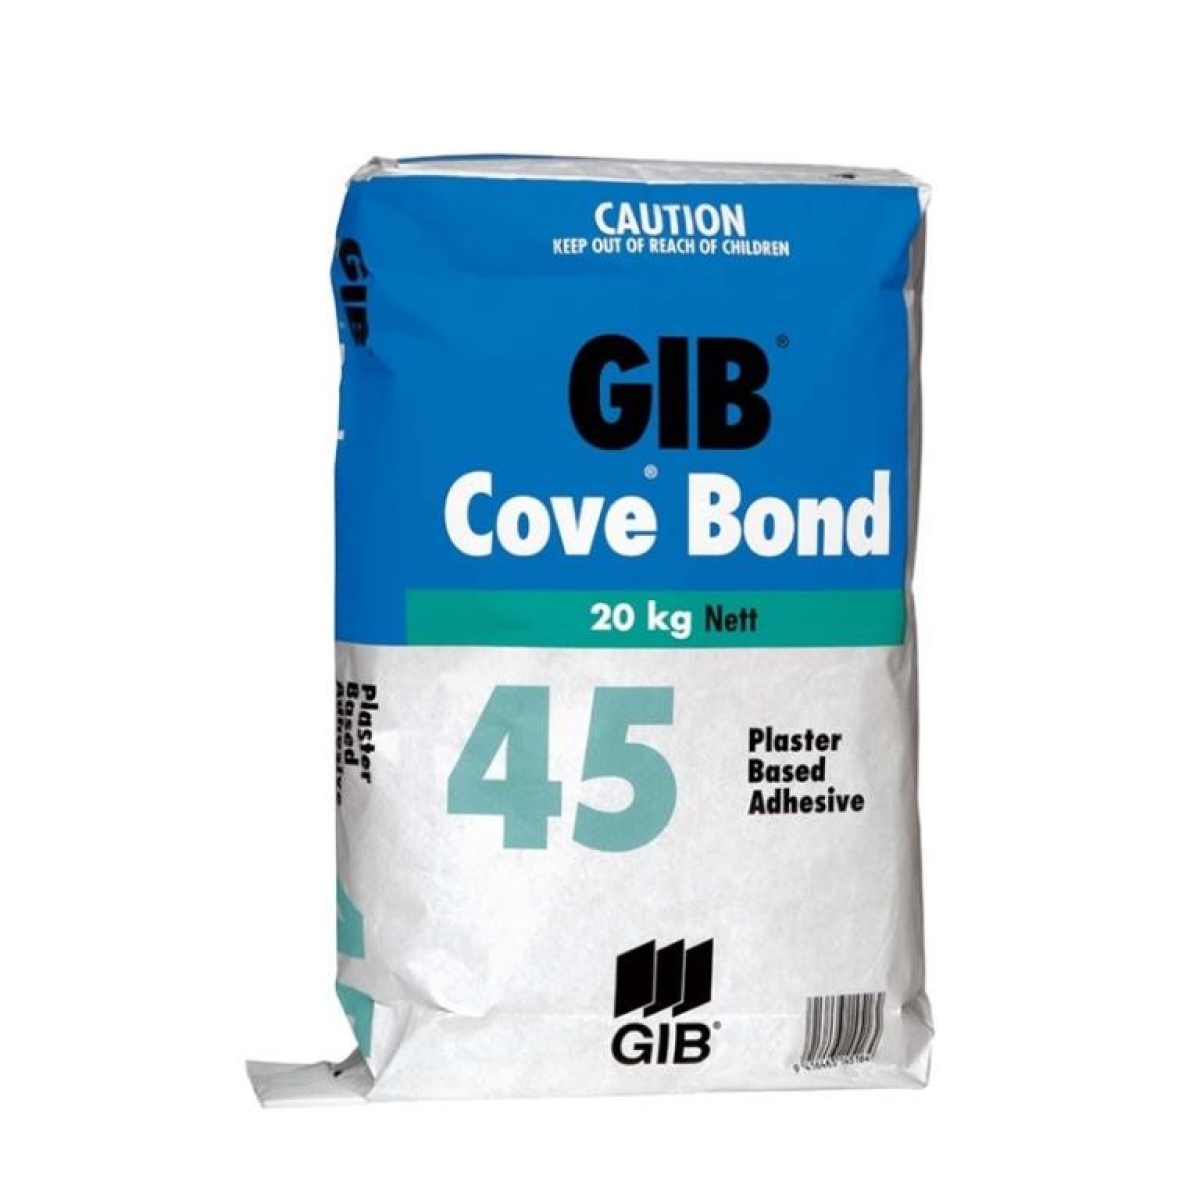 Gib Cove Bond 45